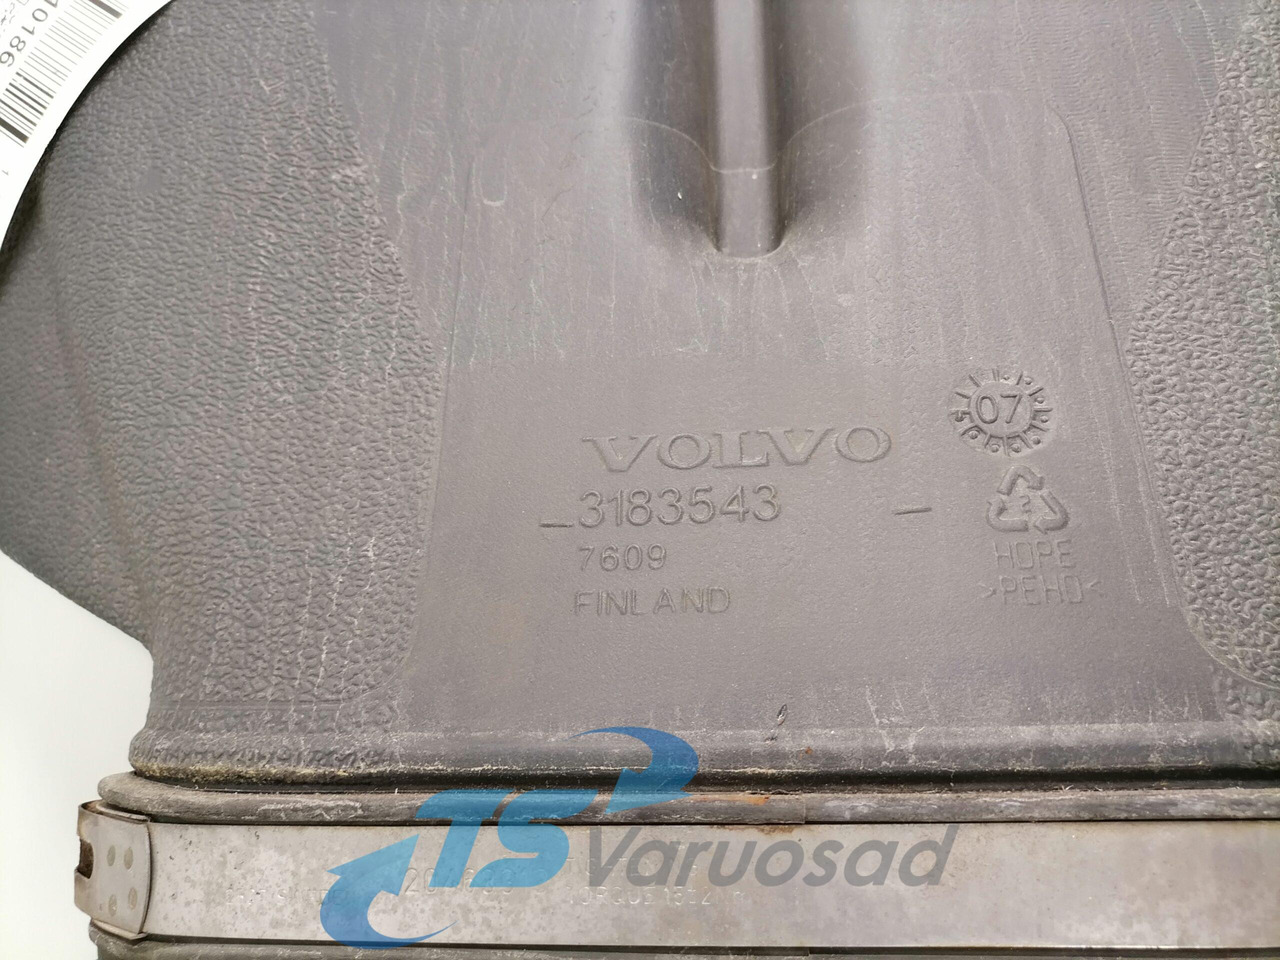 Système d'admission d'air pour Camion Volvo Air intake 3183543: photos 4